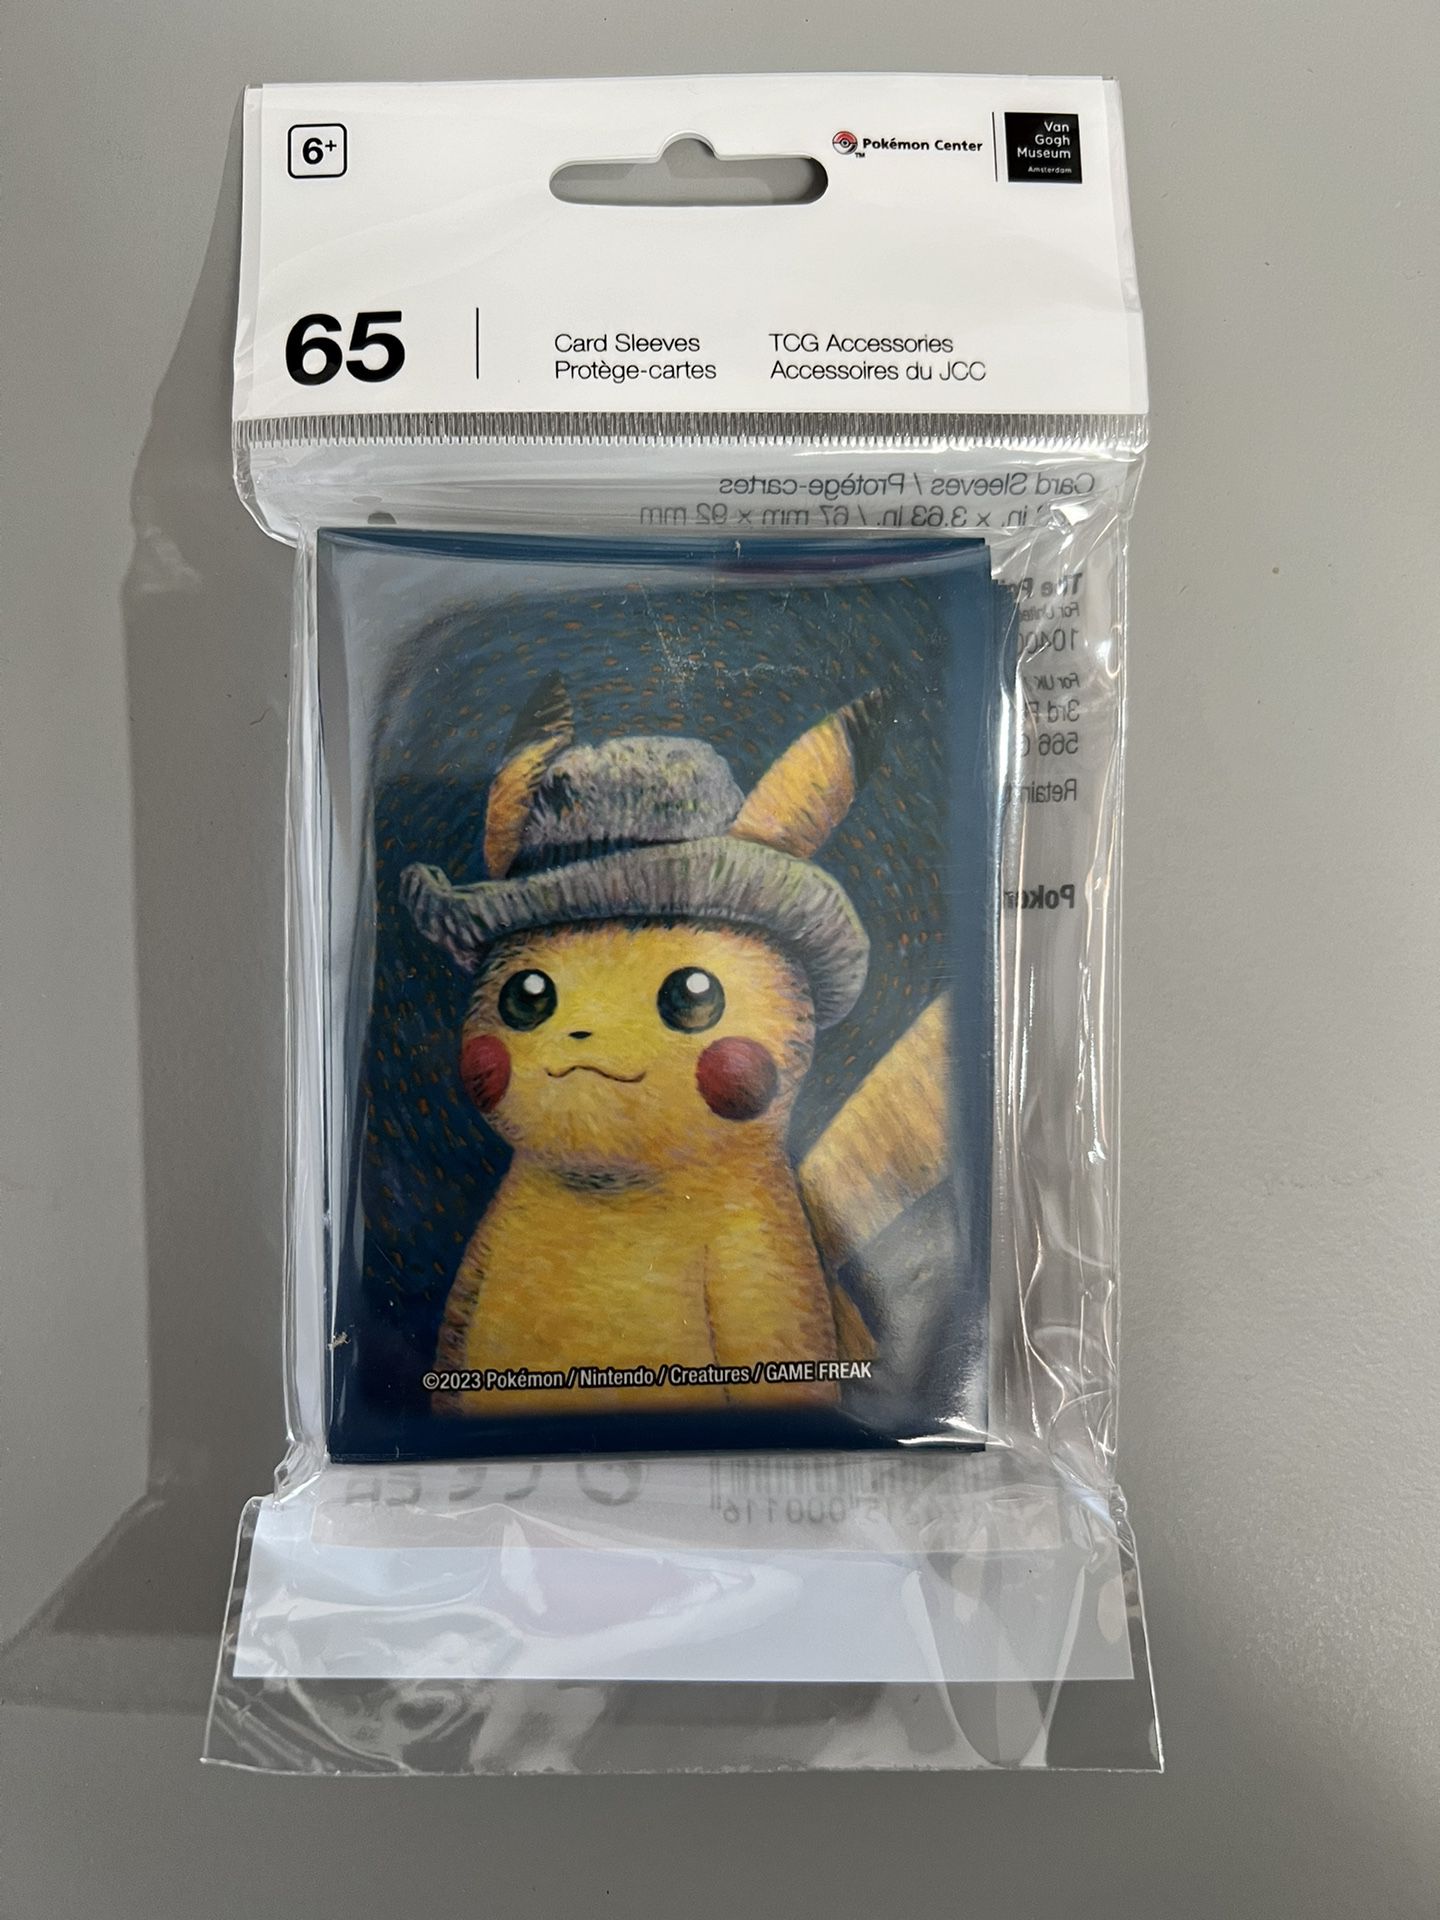 Pokémon Pikachu Card Sleeves